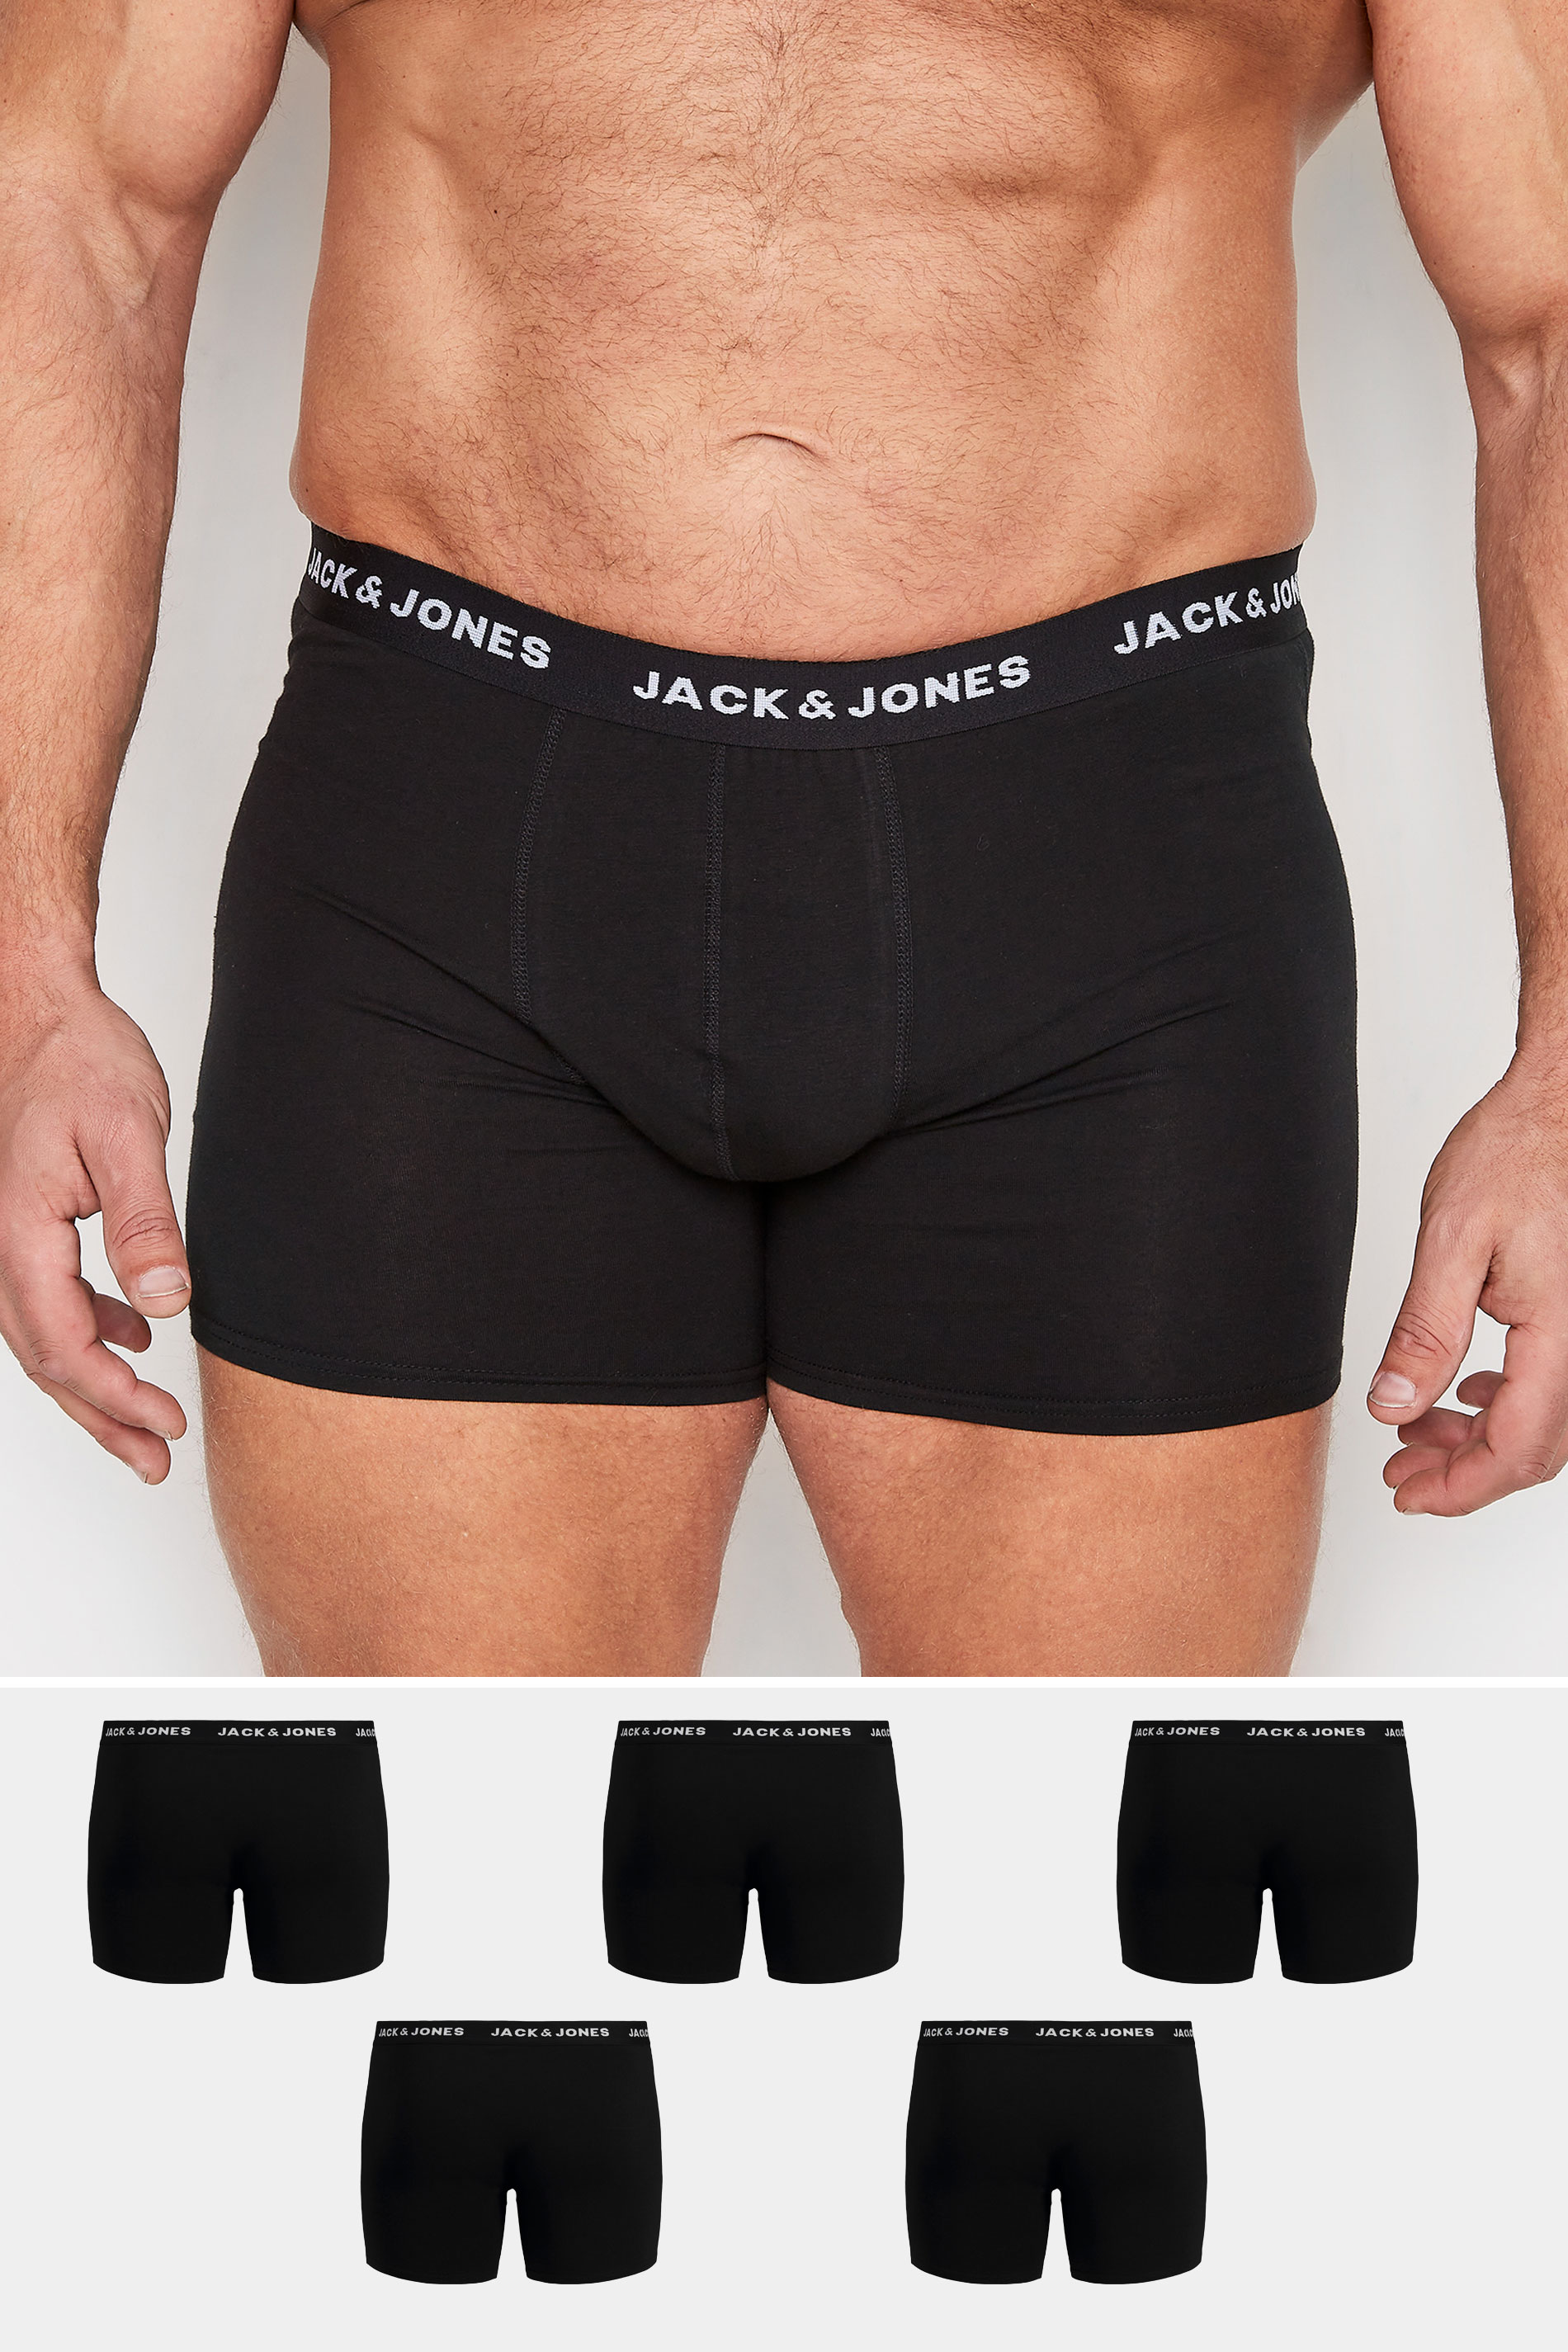 Image of Size 2Xl Mens Jack & Jones Big & Tall 5 Pack Black Boxers Big & Tall